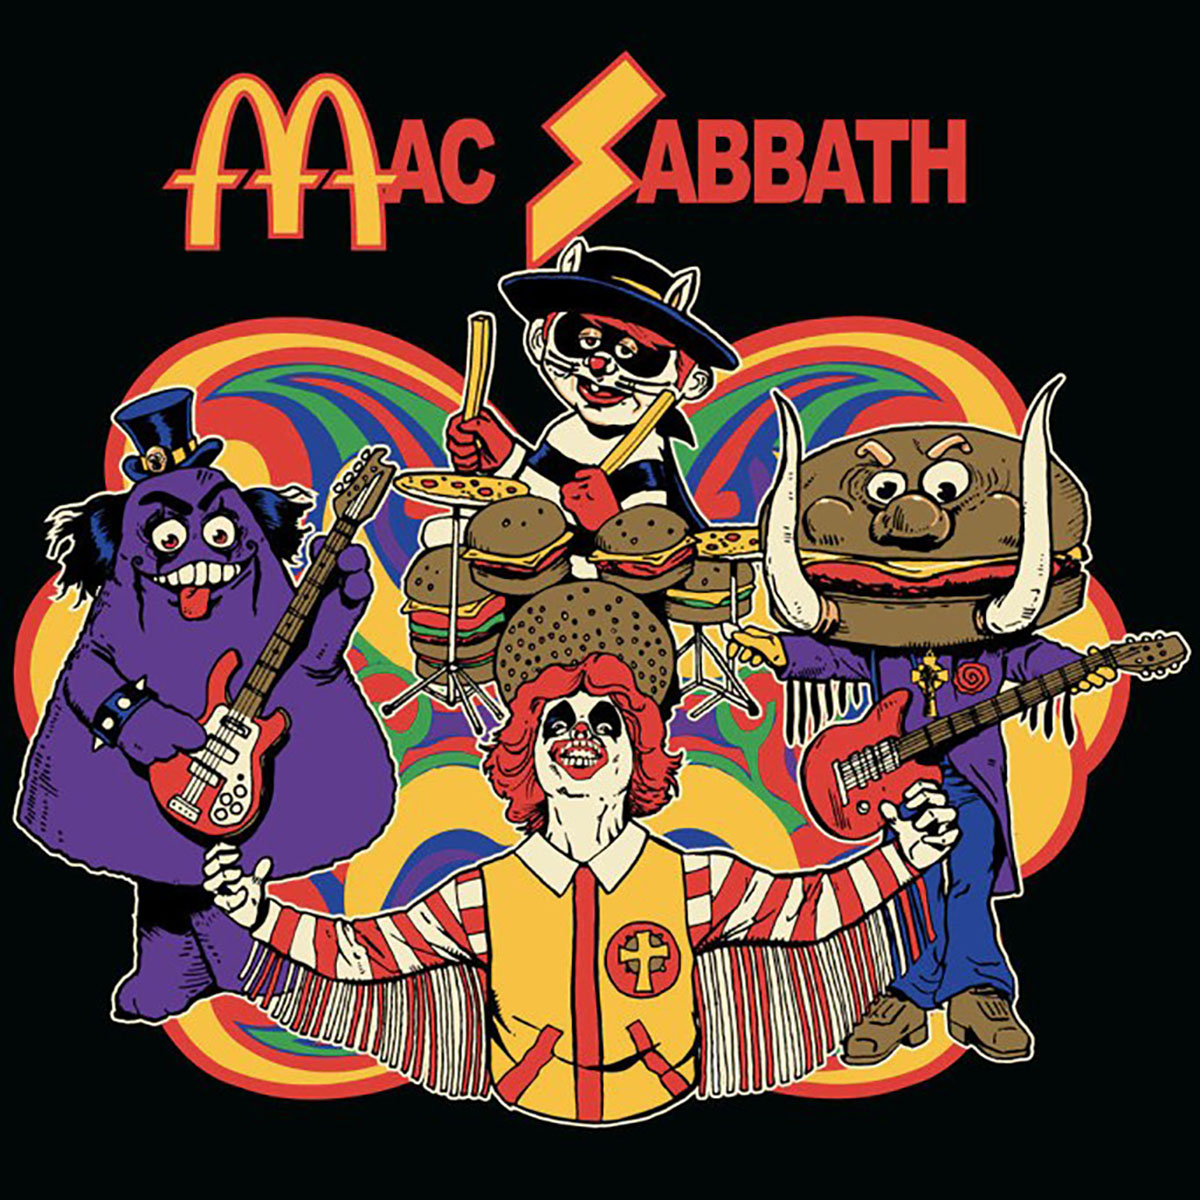 Mac Sabbath album art